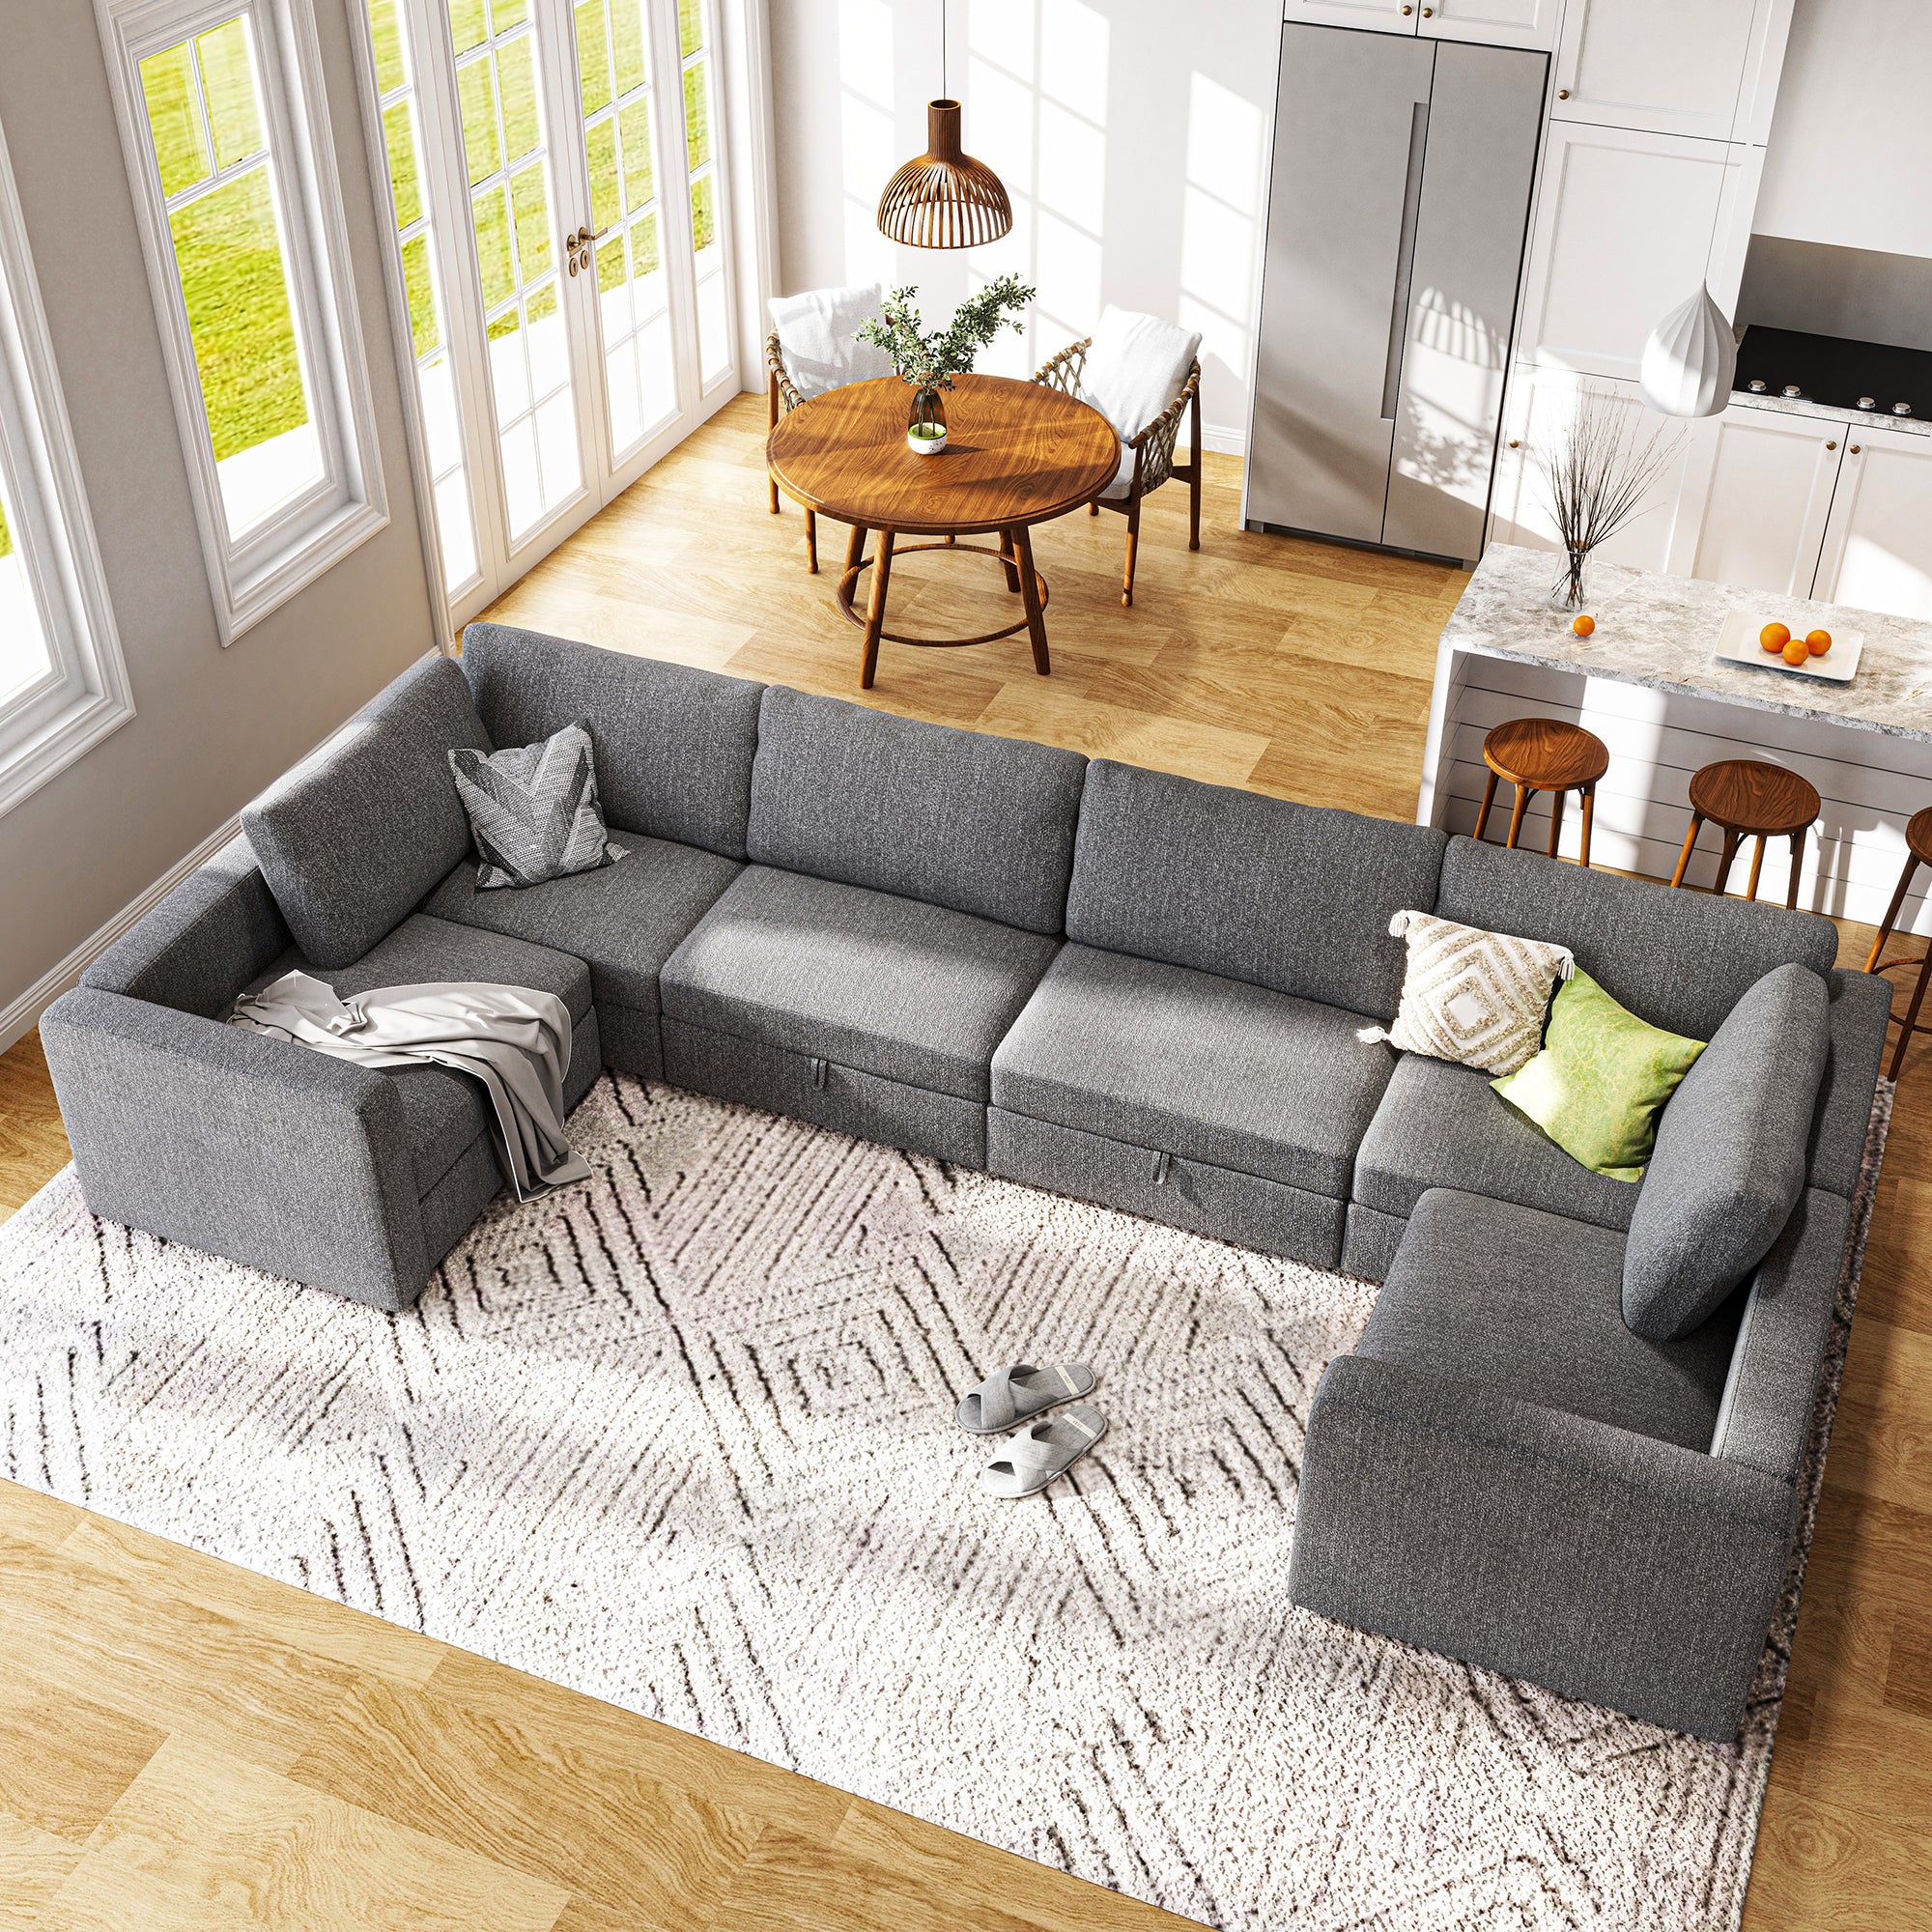 HONBAY Fabric Symmetrical U-shaped Modular Sectional Sofa with High Resilience Foam